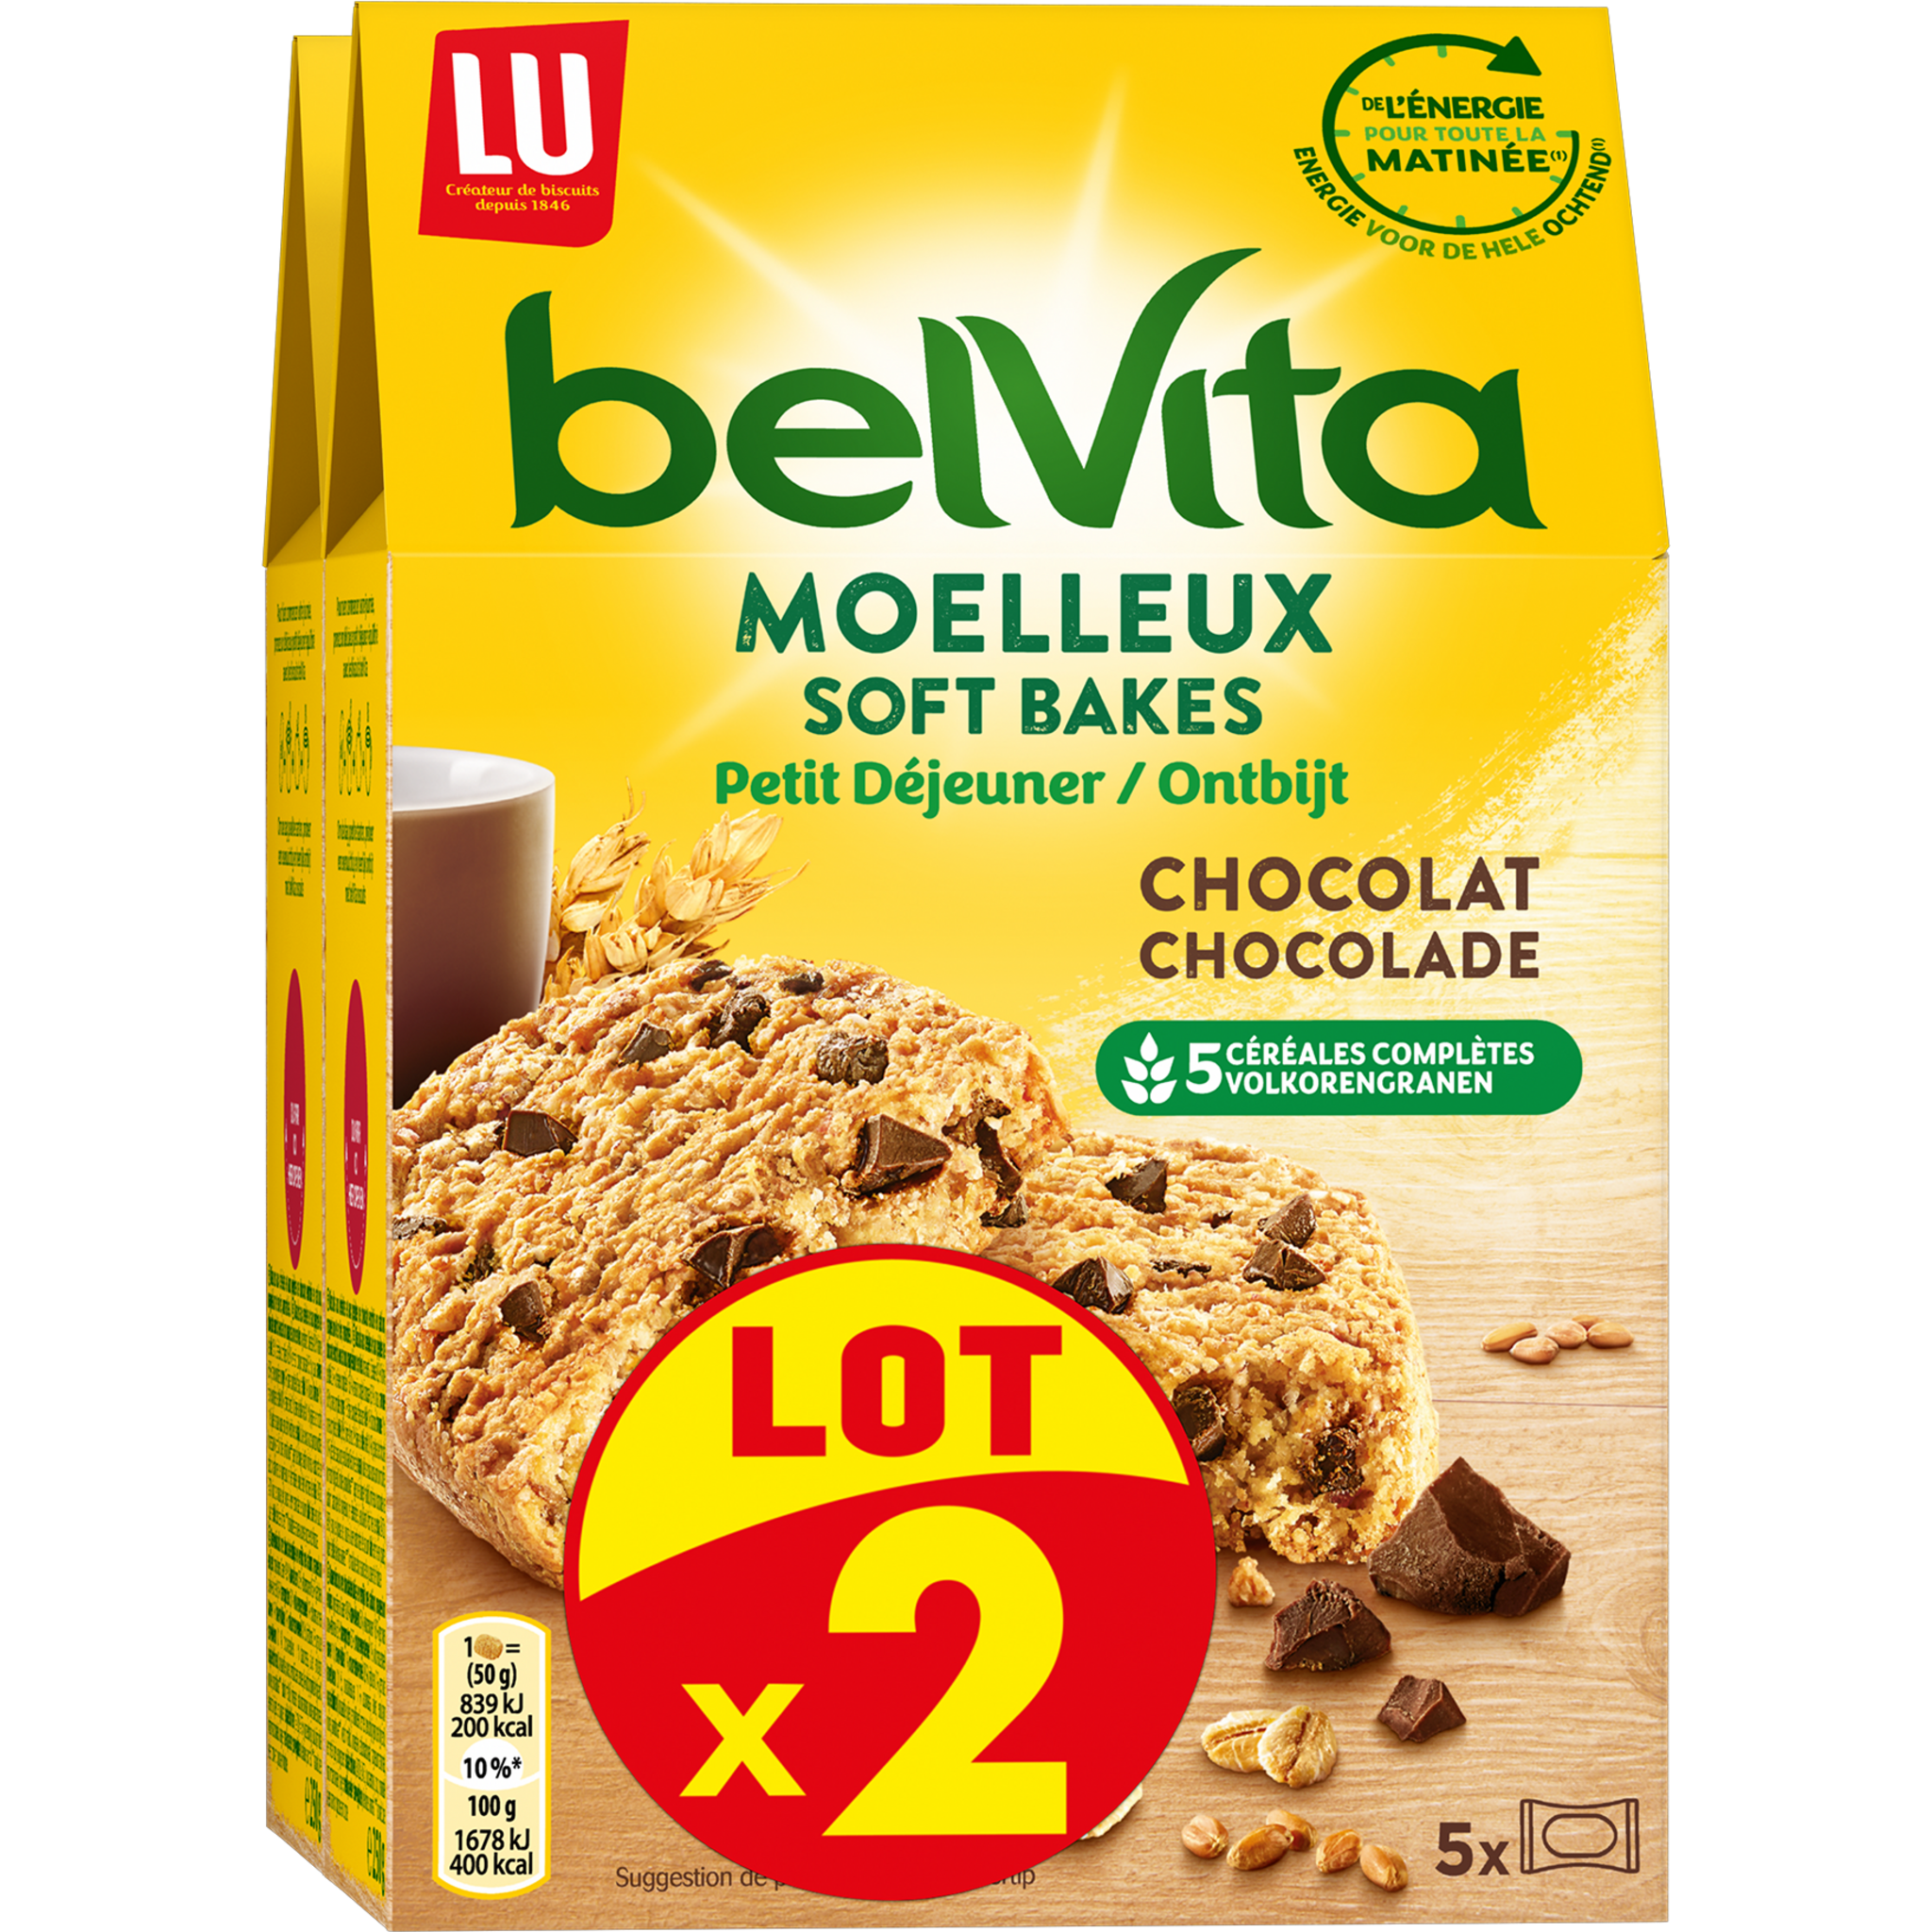 Acheter Lu Belvita petit déjeuner moelleux goût choco-noisettes, 250g